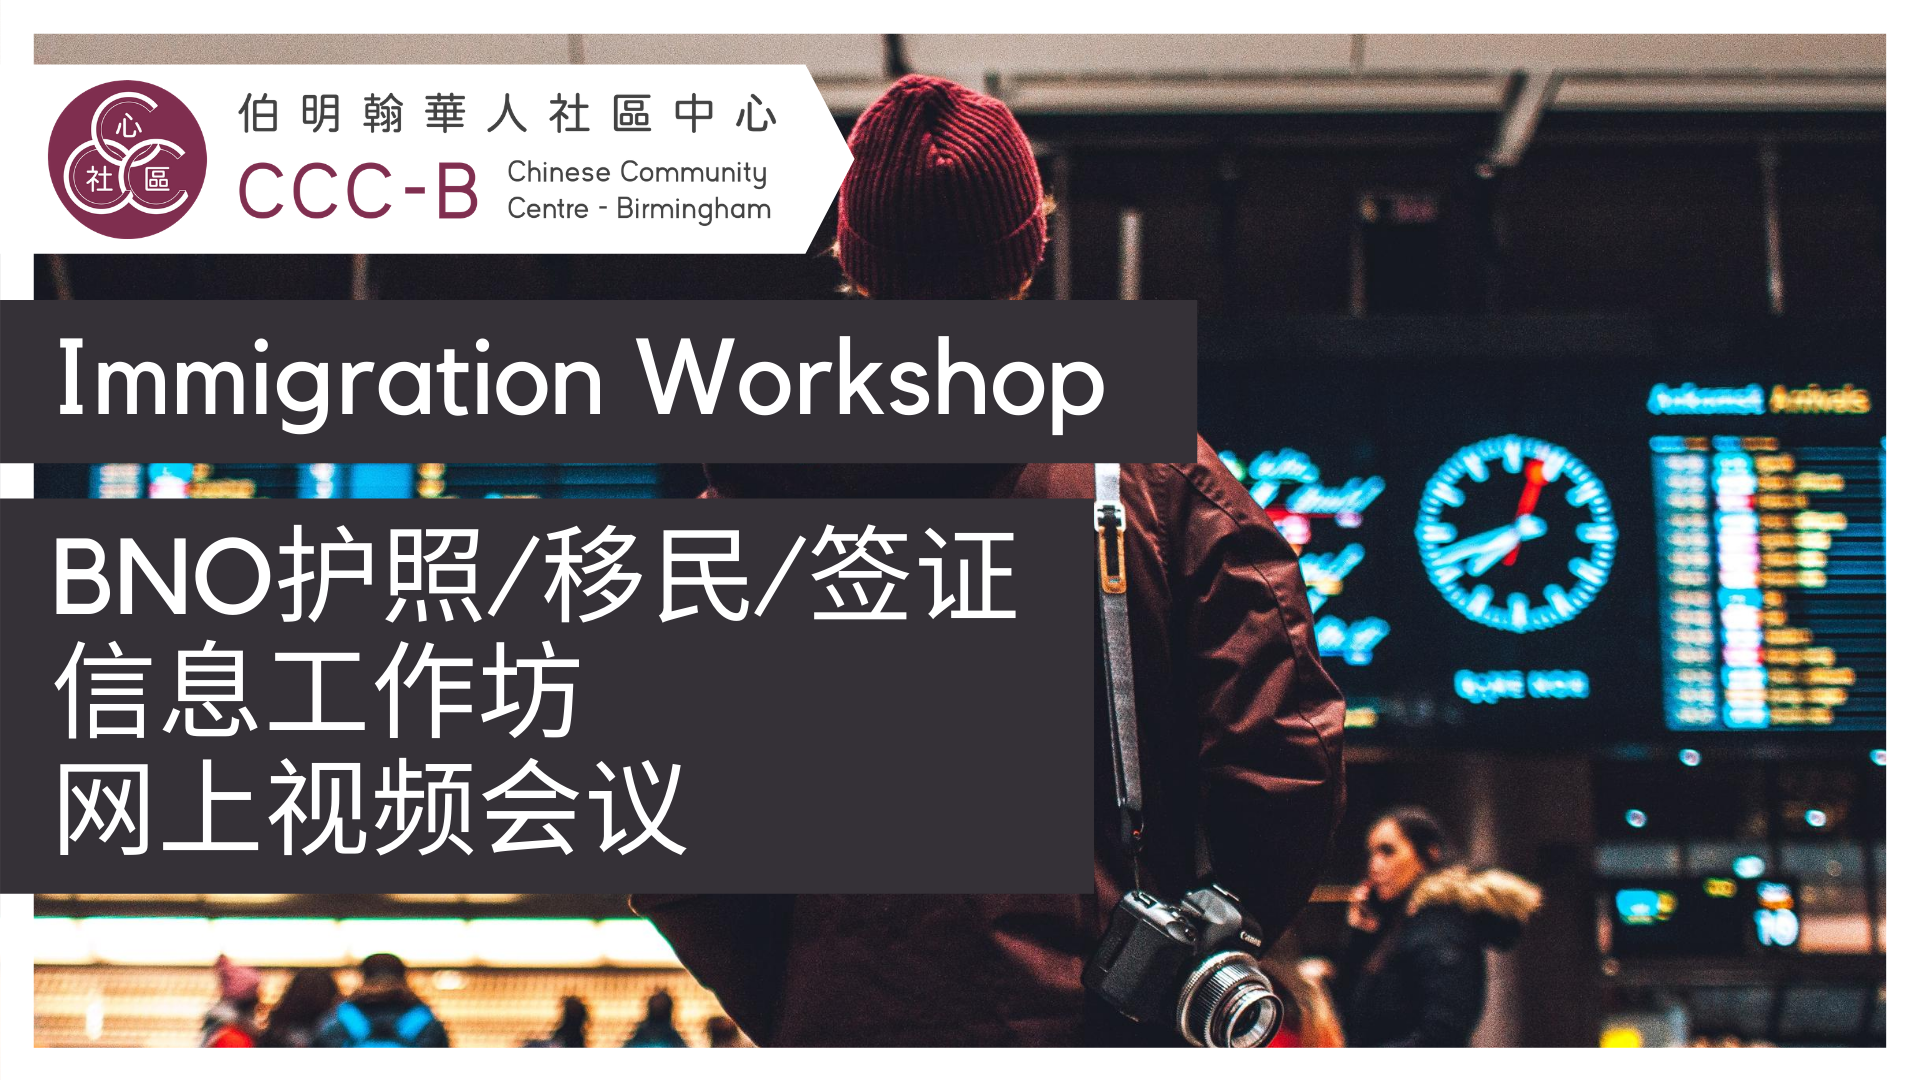 Immigration Workshop – BNO护照/移民/签证 – 信息工作坊 网上视频会议